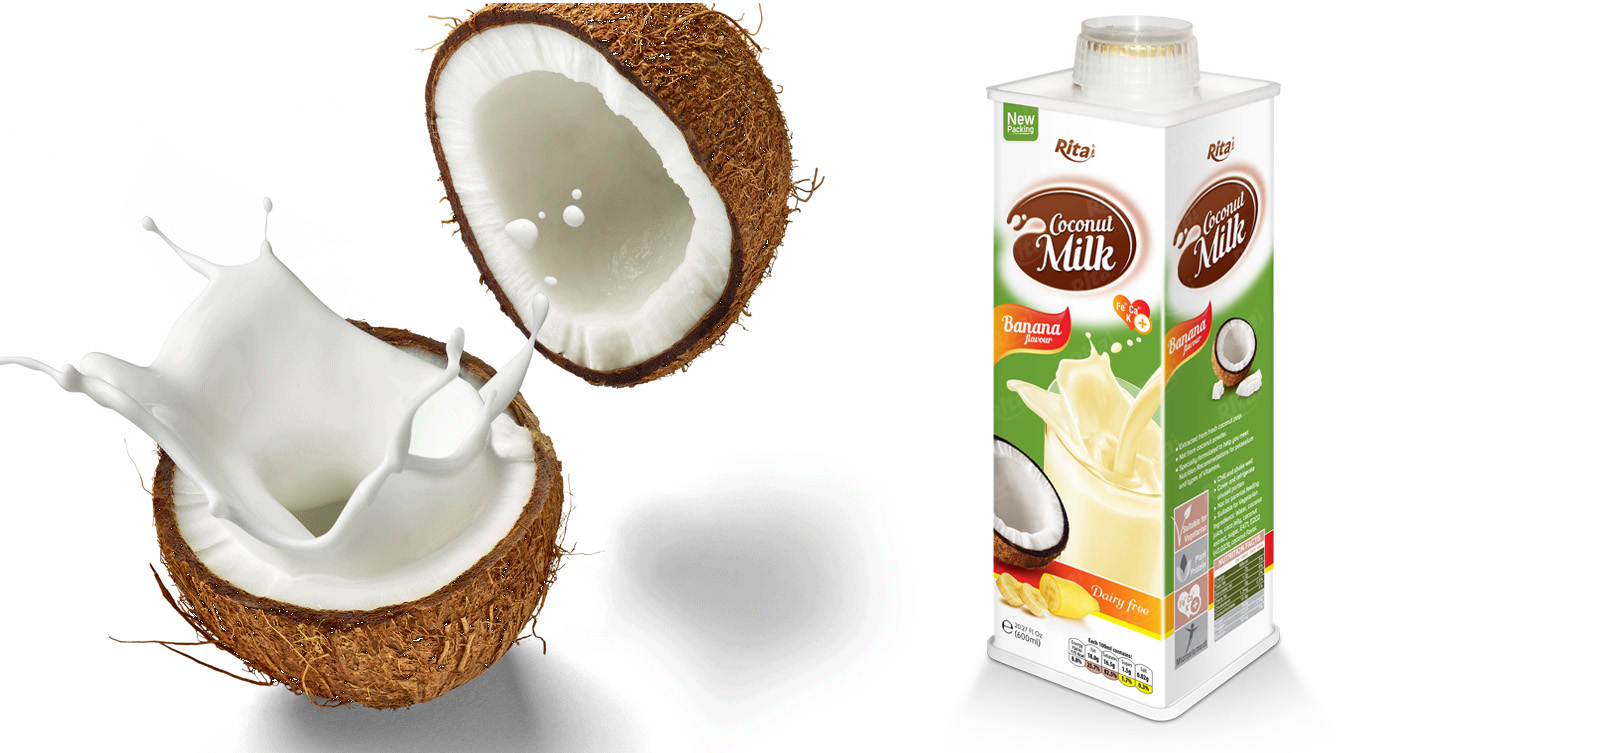 The 5 Health Benefits of Coconut Milk